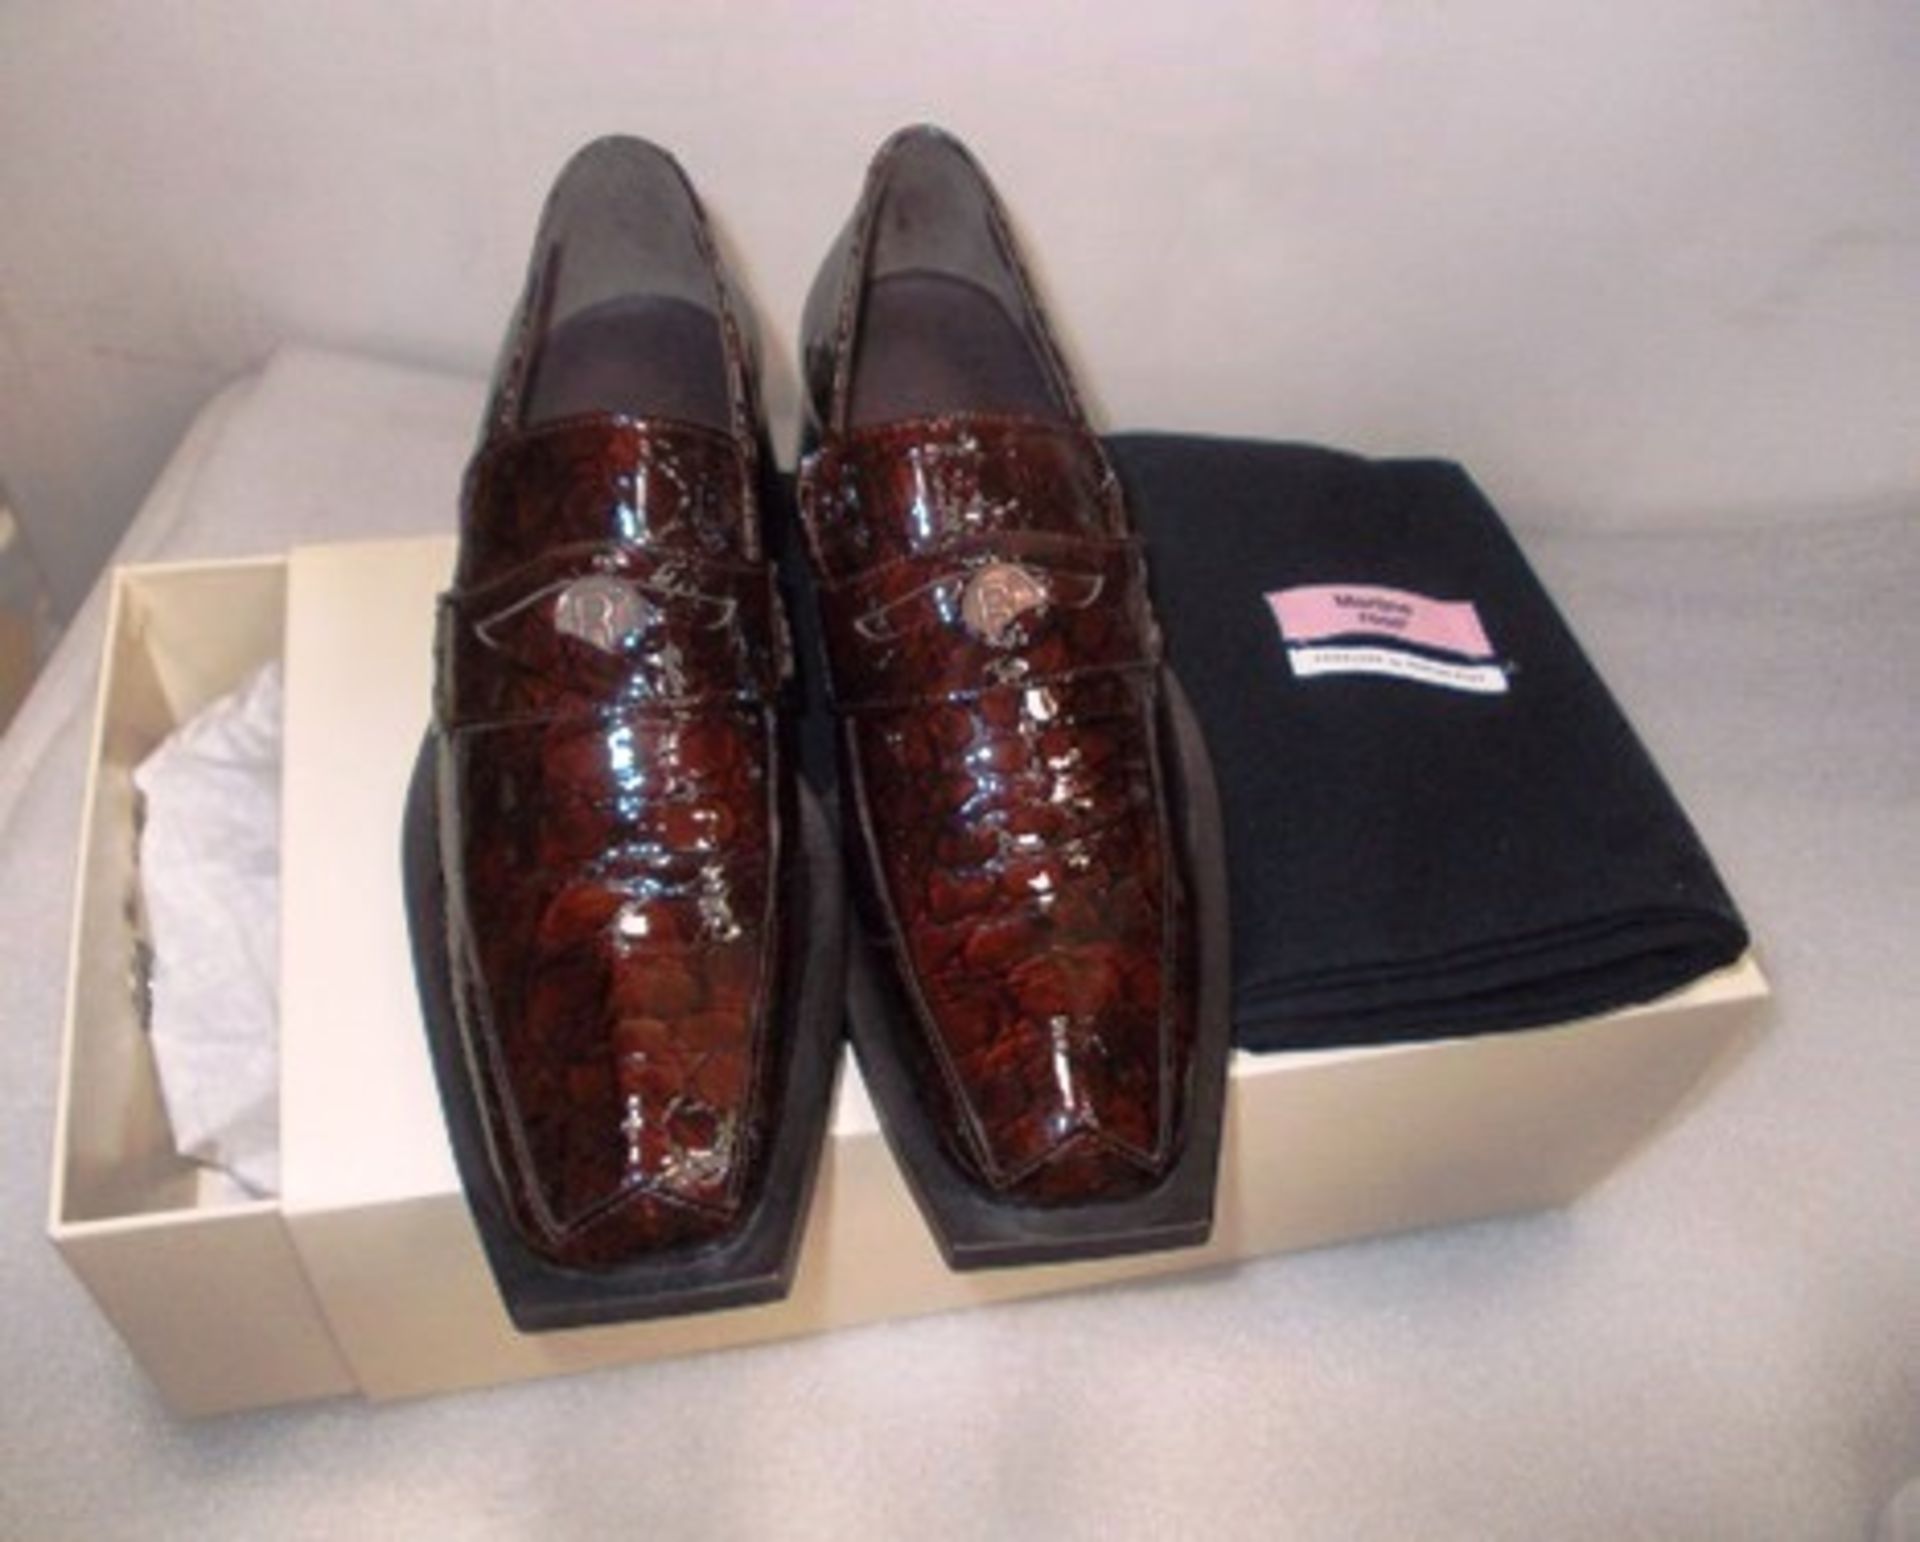 1 x pair of Martine Rose ladies brown croc embossed Bagleys loafers, size 38 - New (S15)